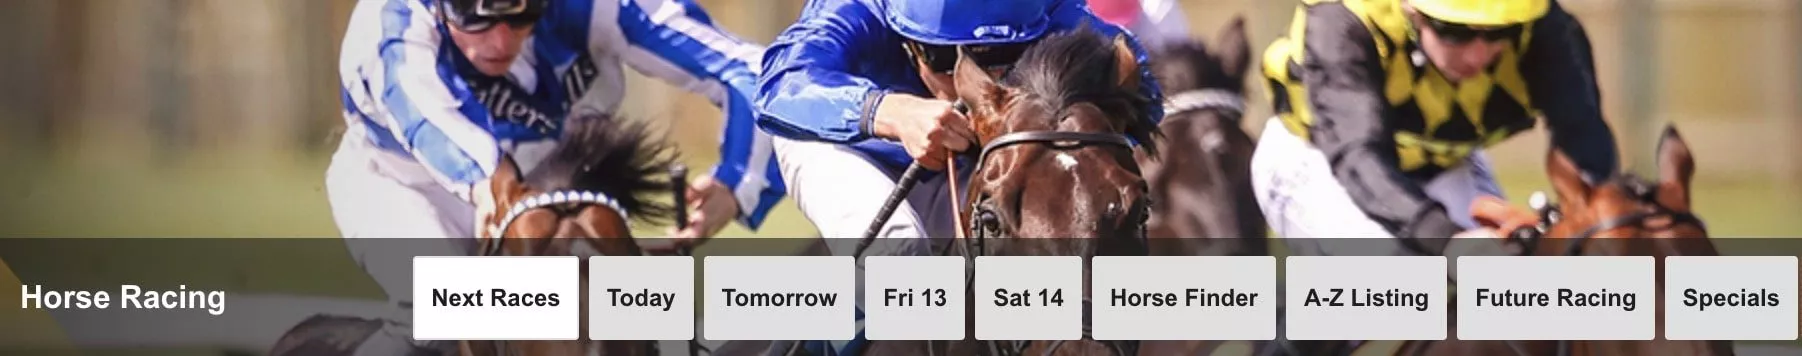 Horse race betting online